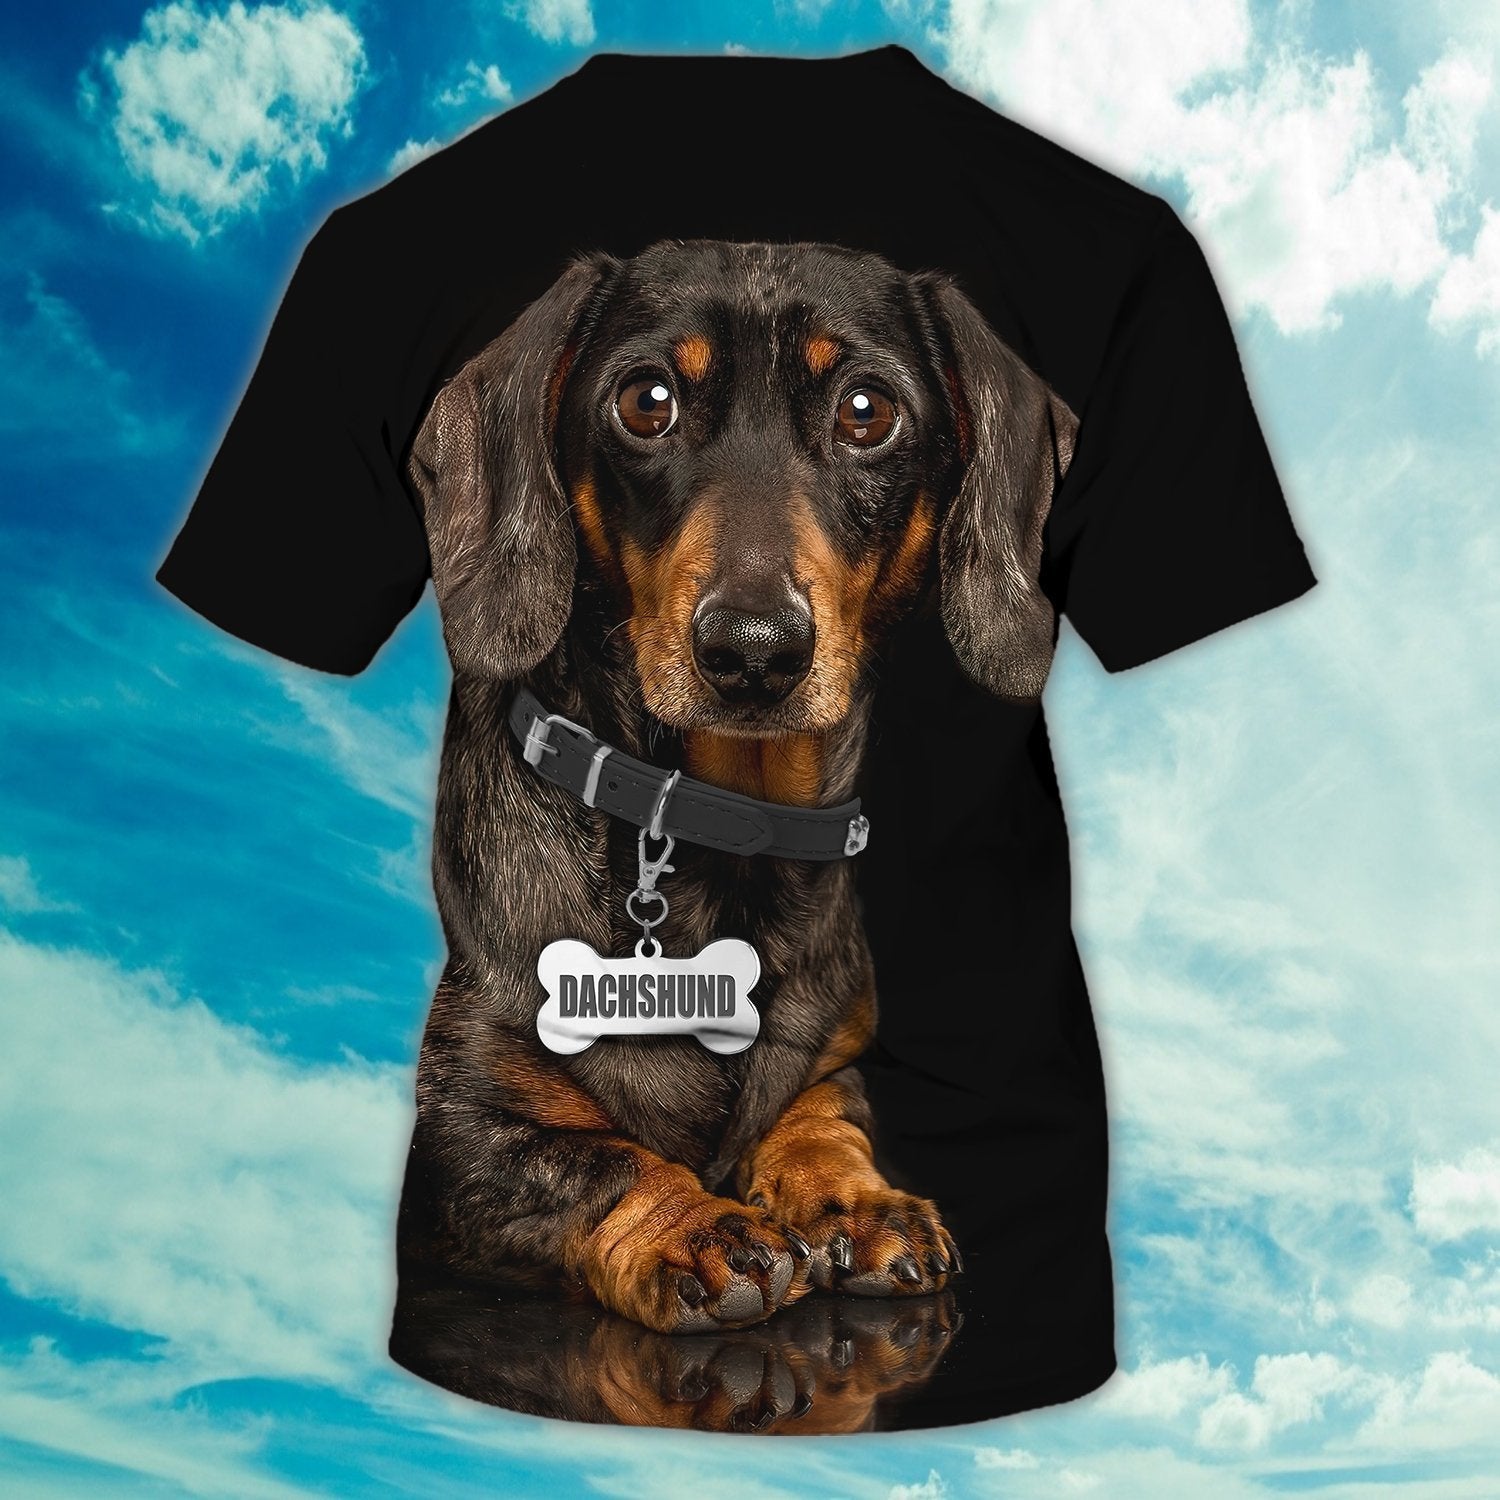 Custom Name Love Dachshund 3D Full Printed T Shirt/ Black Shirt For Dog Lovers